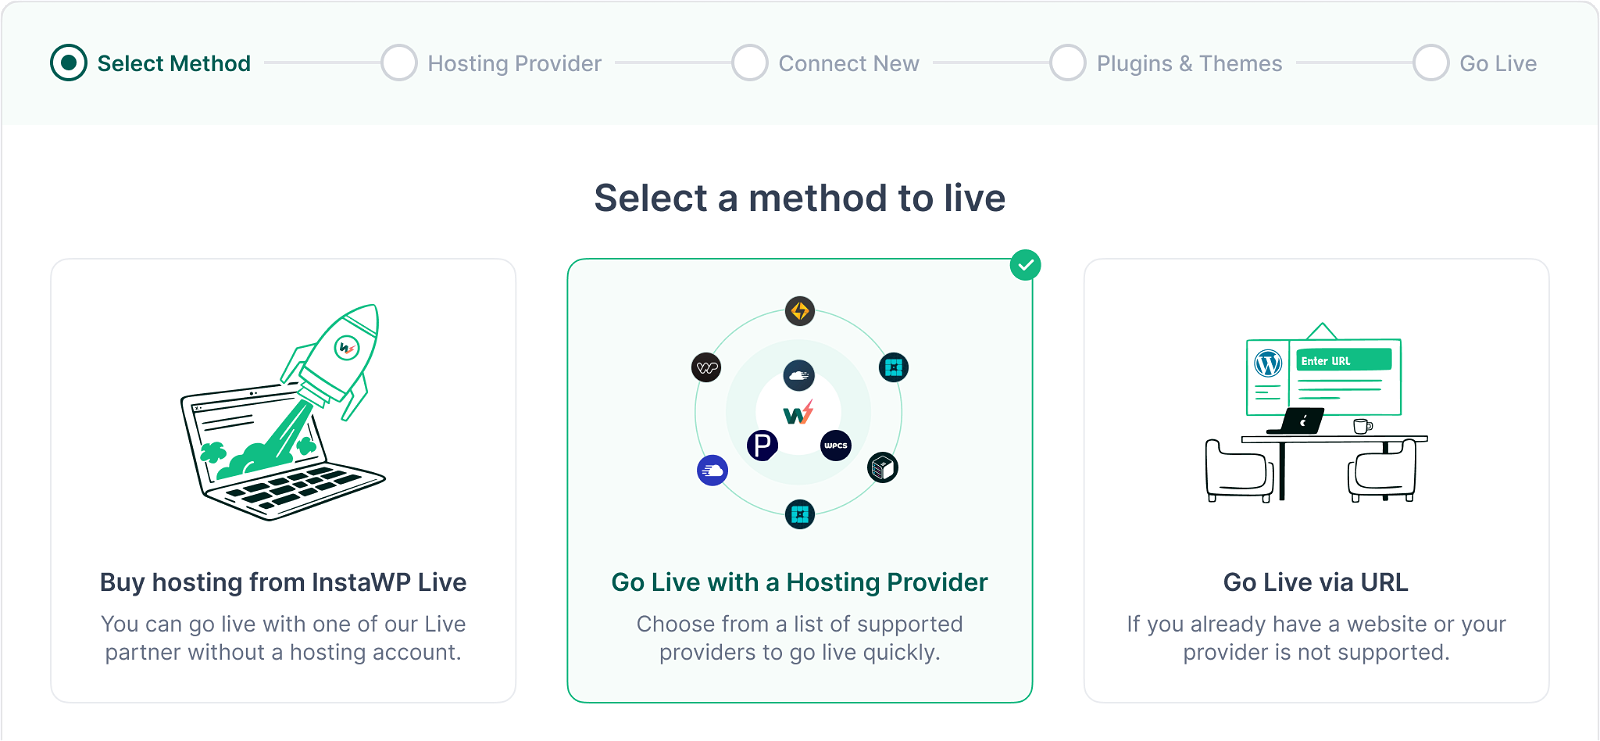 Go Live with a Hosting Provider